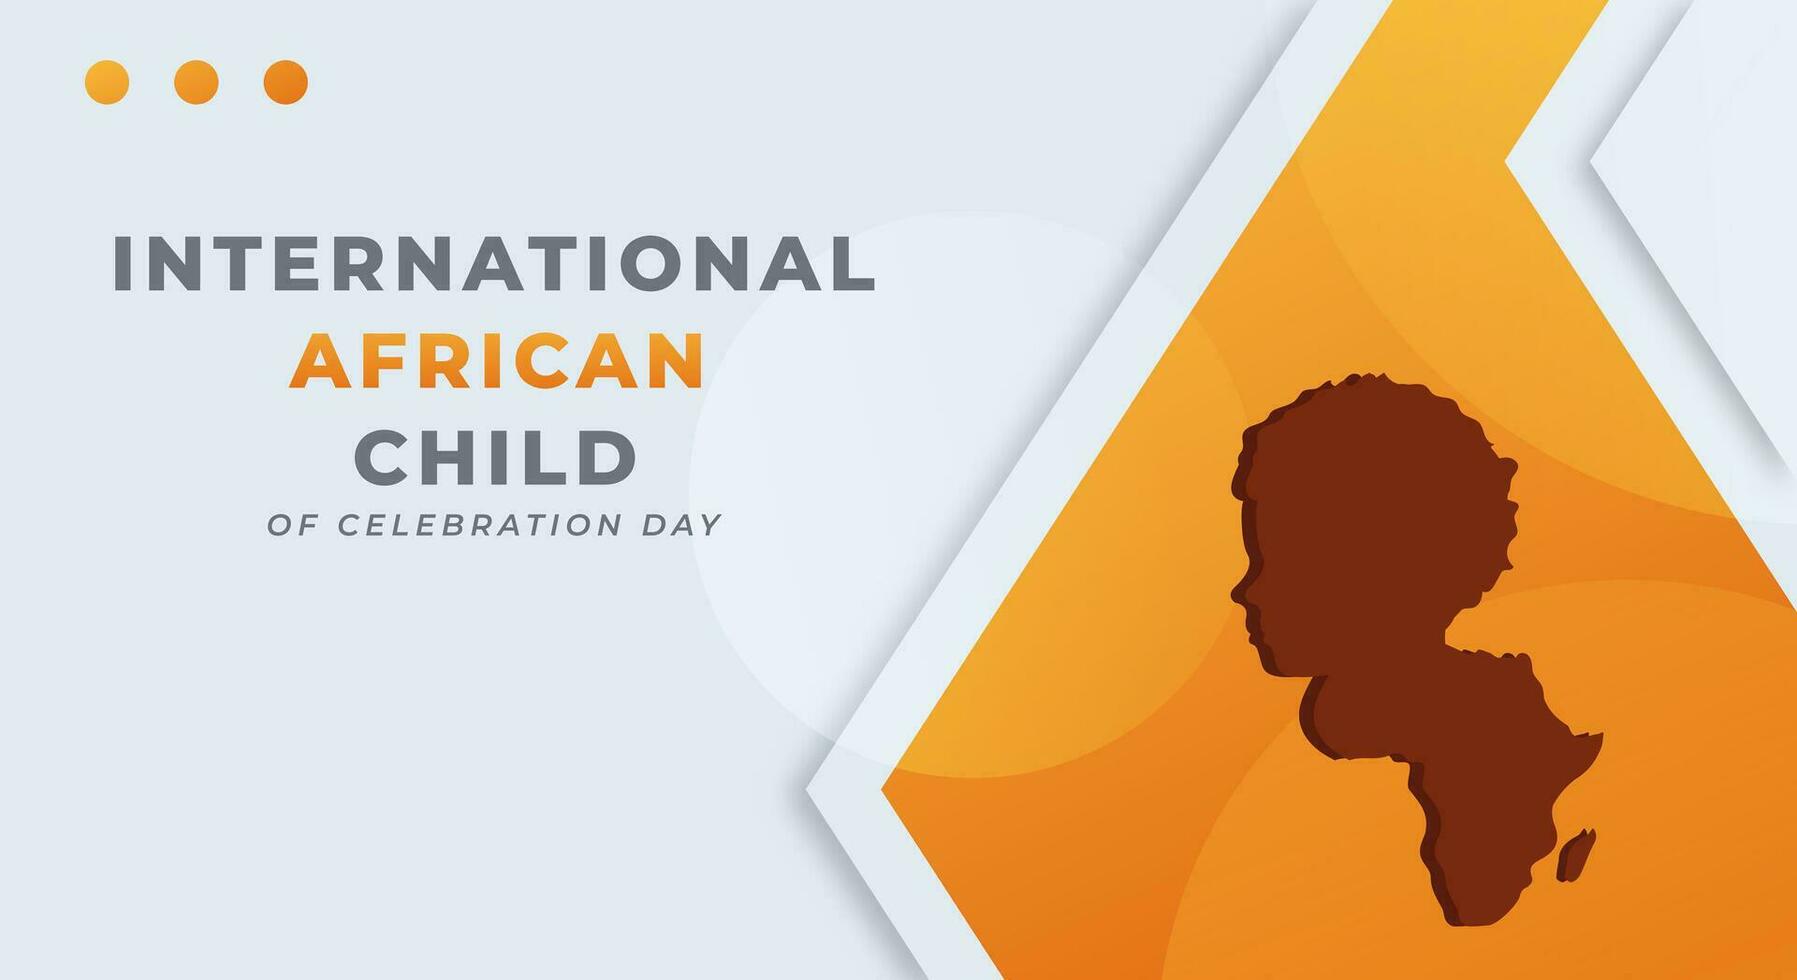 International African Child Day Celebration Vector Design Illustration for Background, Poster, Banner, Advertising, Greeting Card